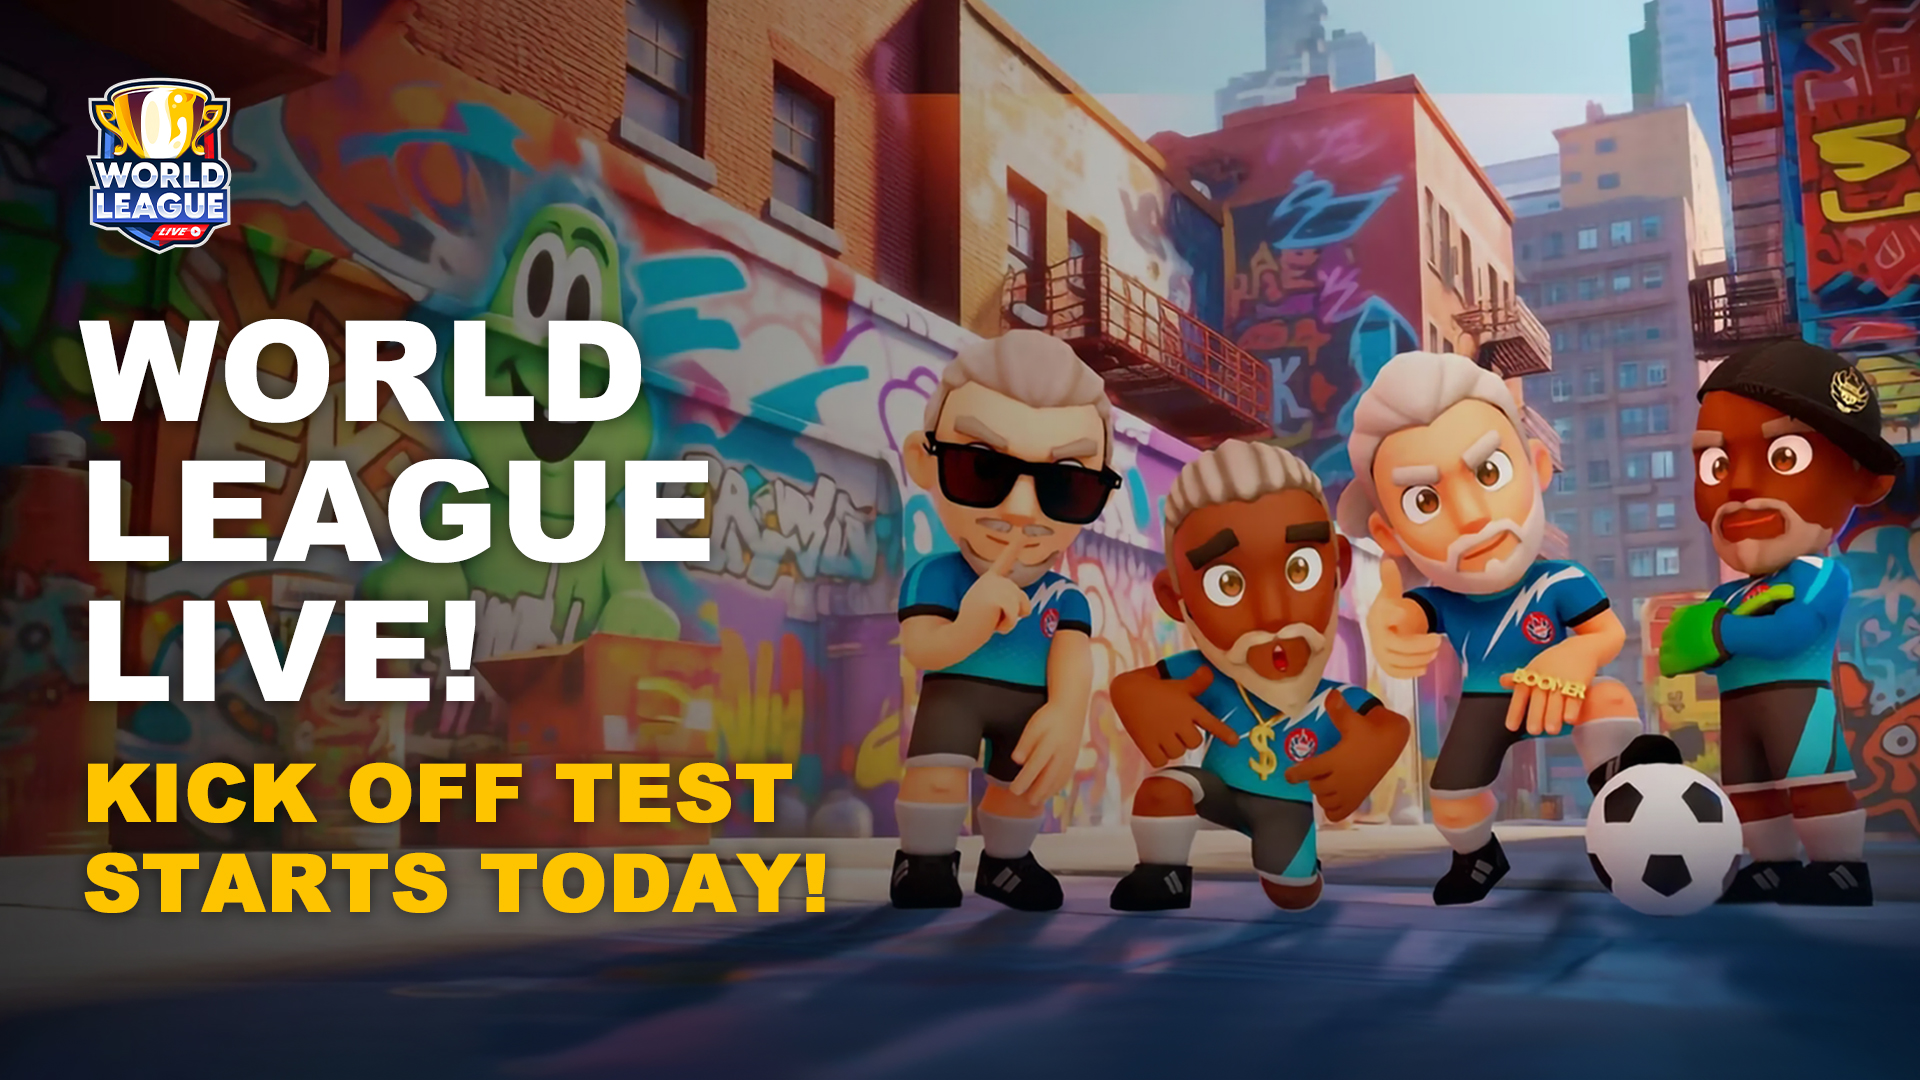 World League Live!已开启KICK OFF创世测试，参与游戏可赢取Power奖励